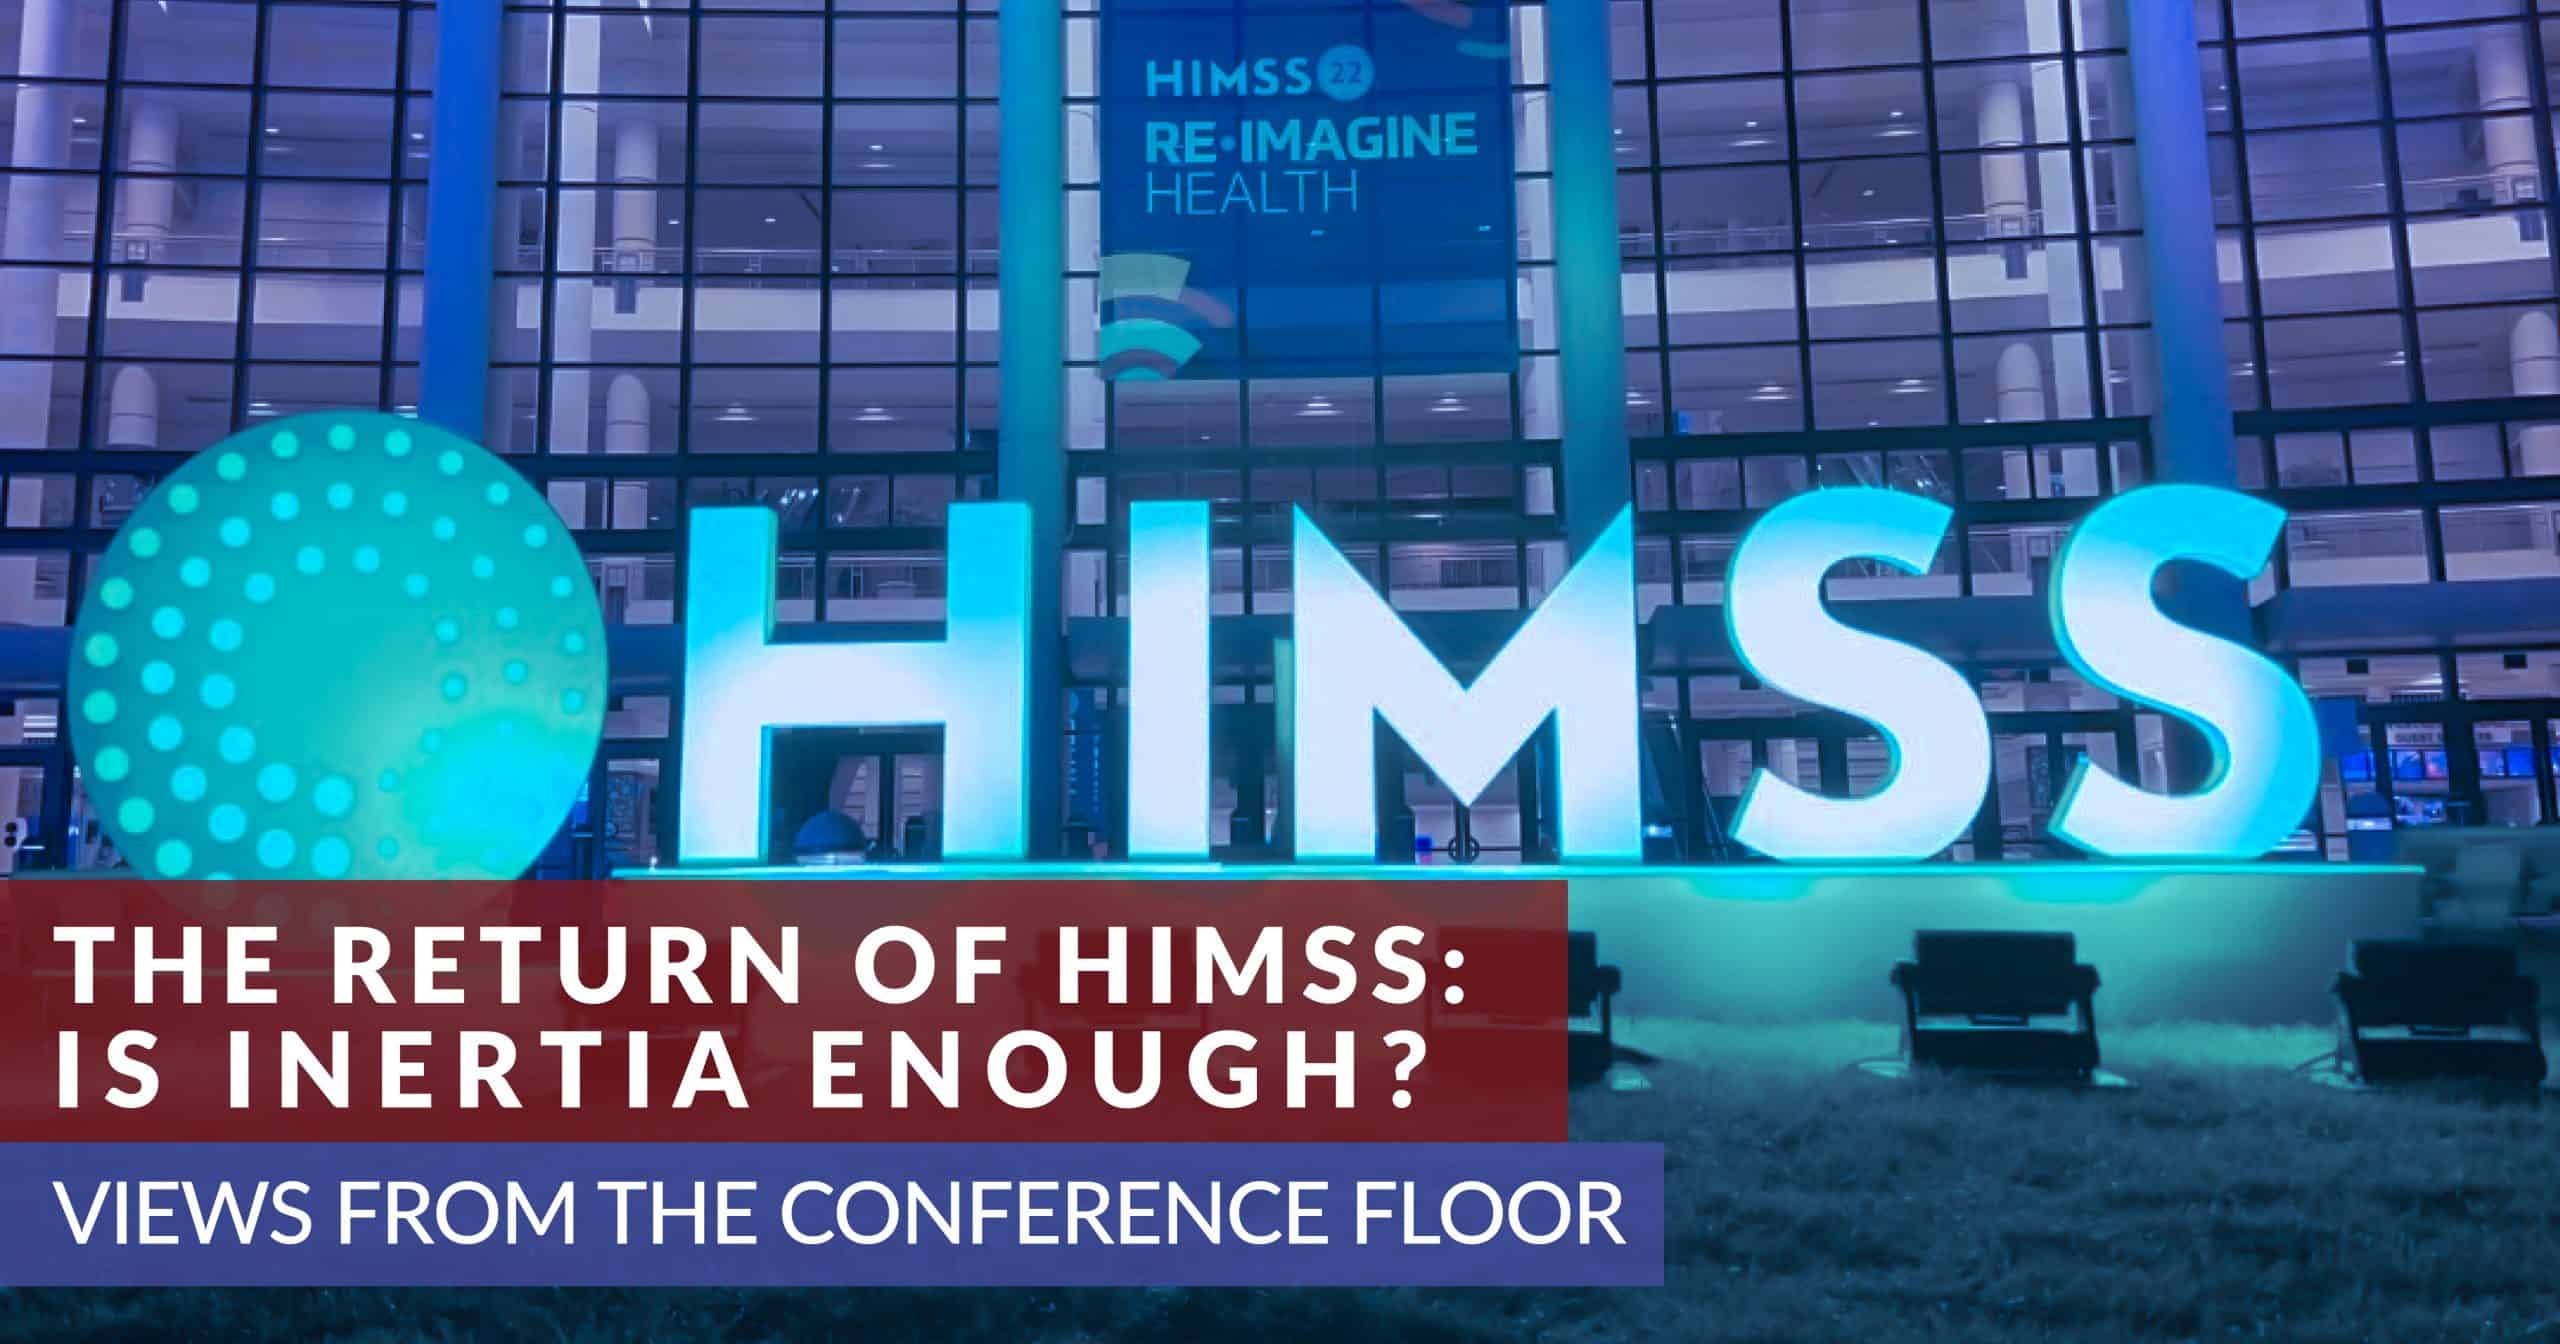 The Return of HIMSS: Is Inertia Enough?